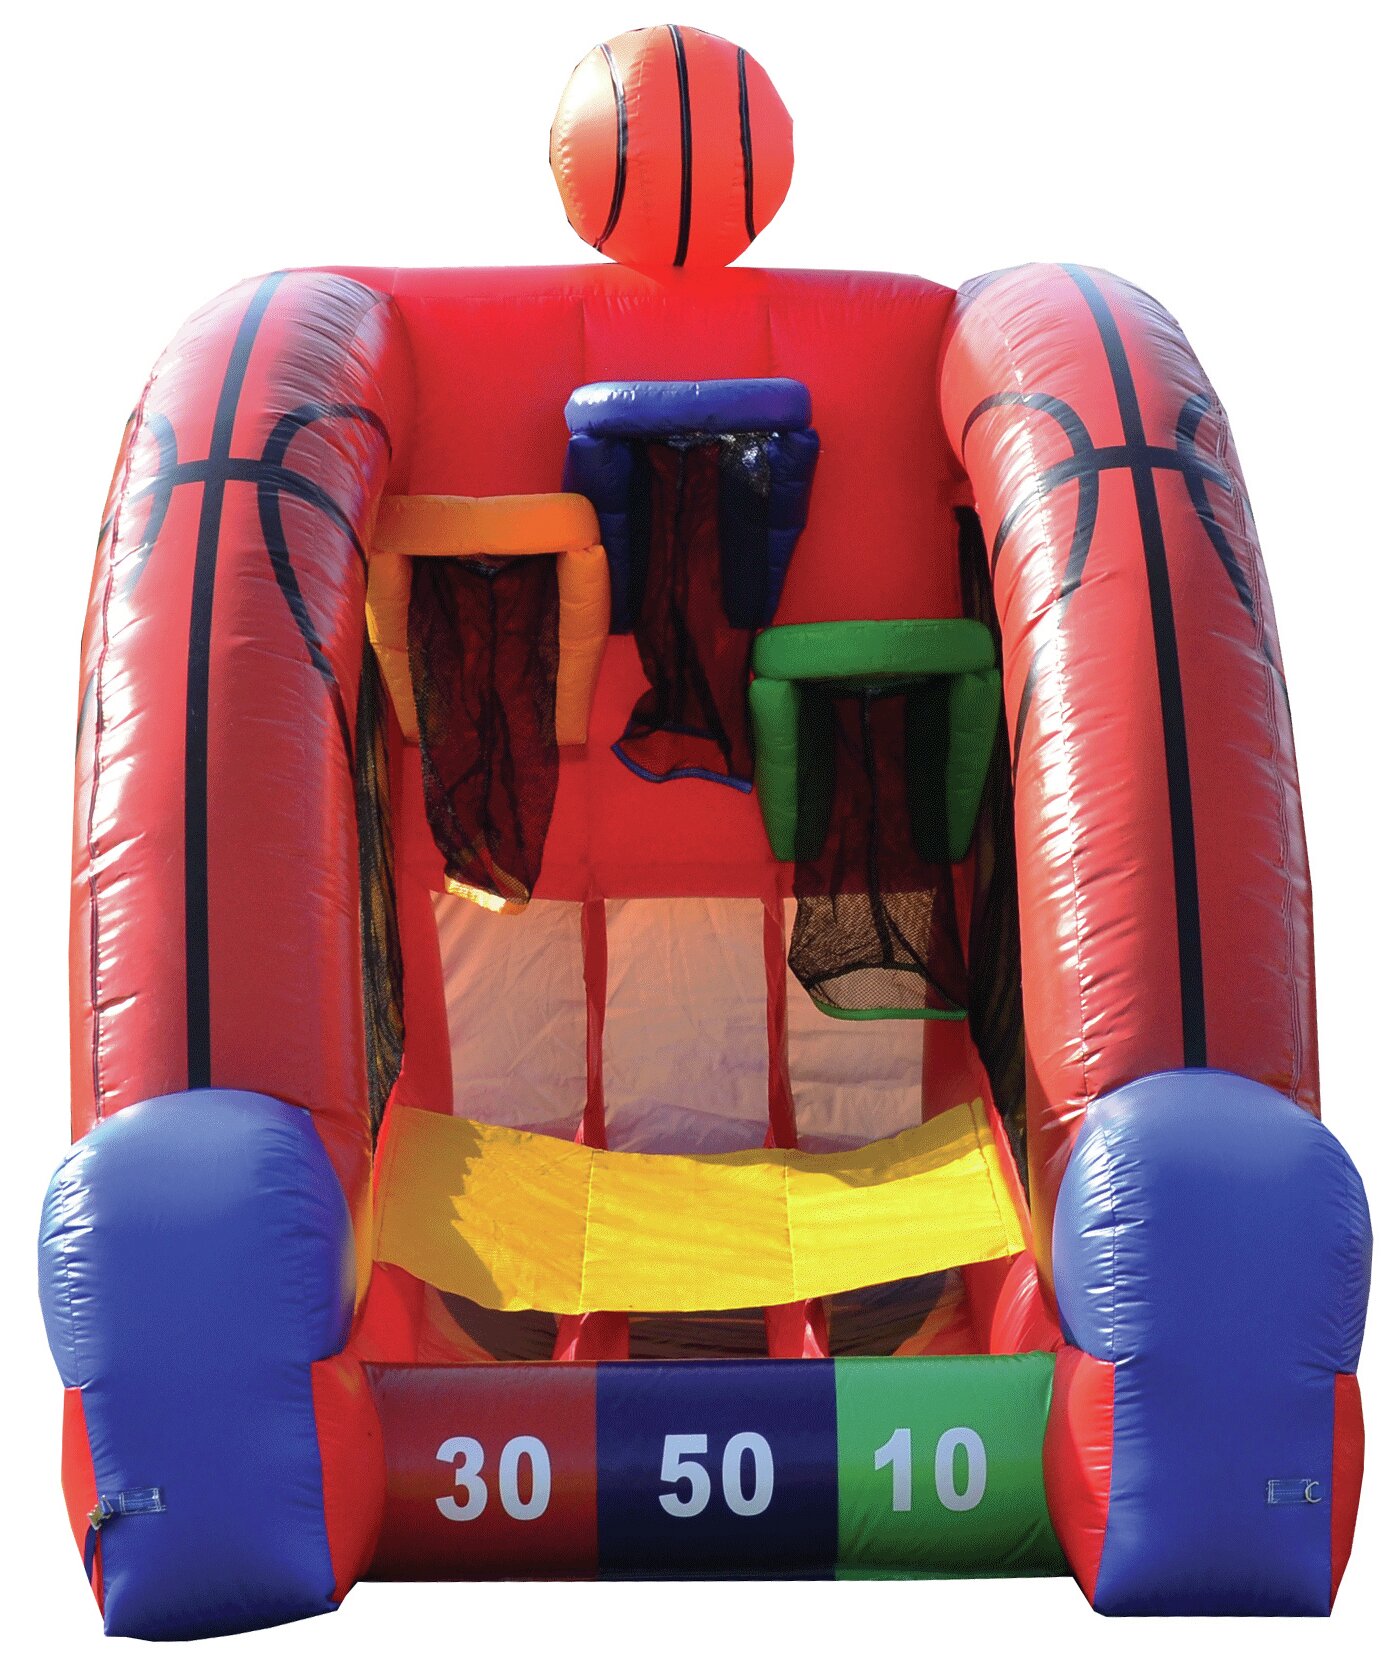 JumpOrange Inflatable Basketball Game Bounce House 851743008002 | eBay